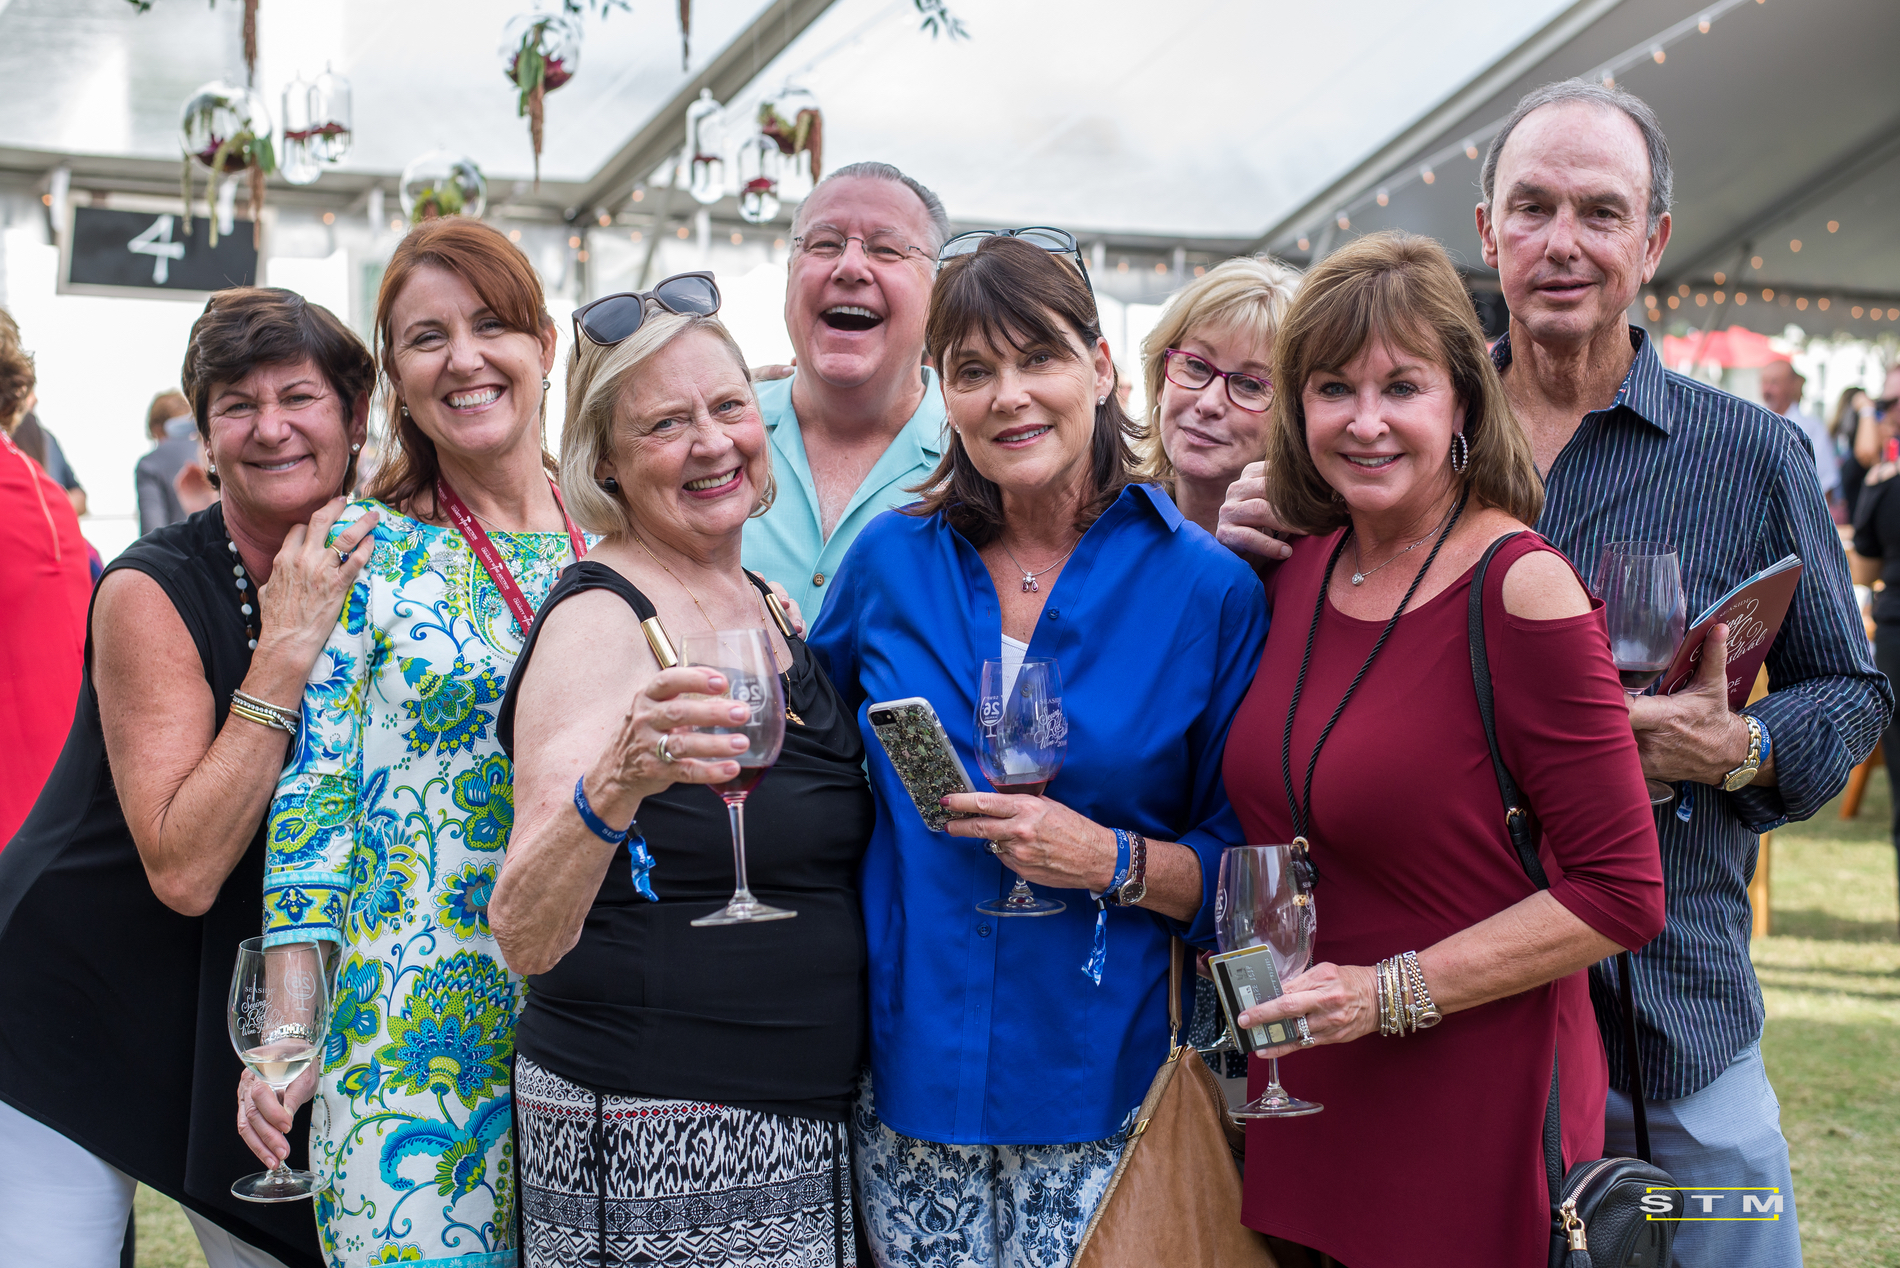 Patrons at Silent Auction DCWAF wine festival event Seaside FL